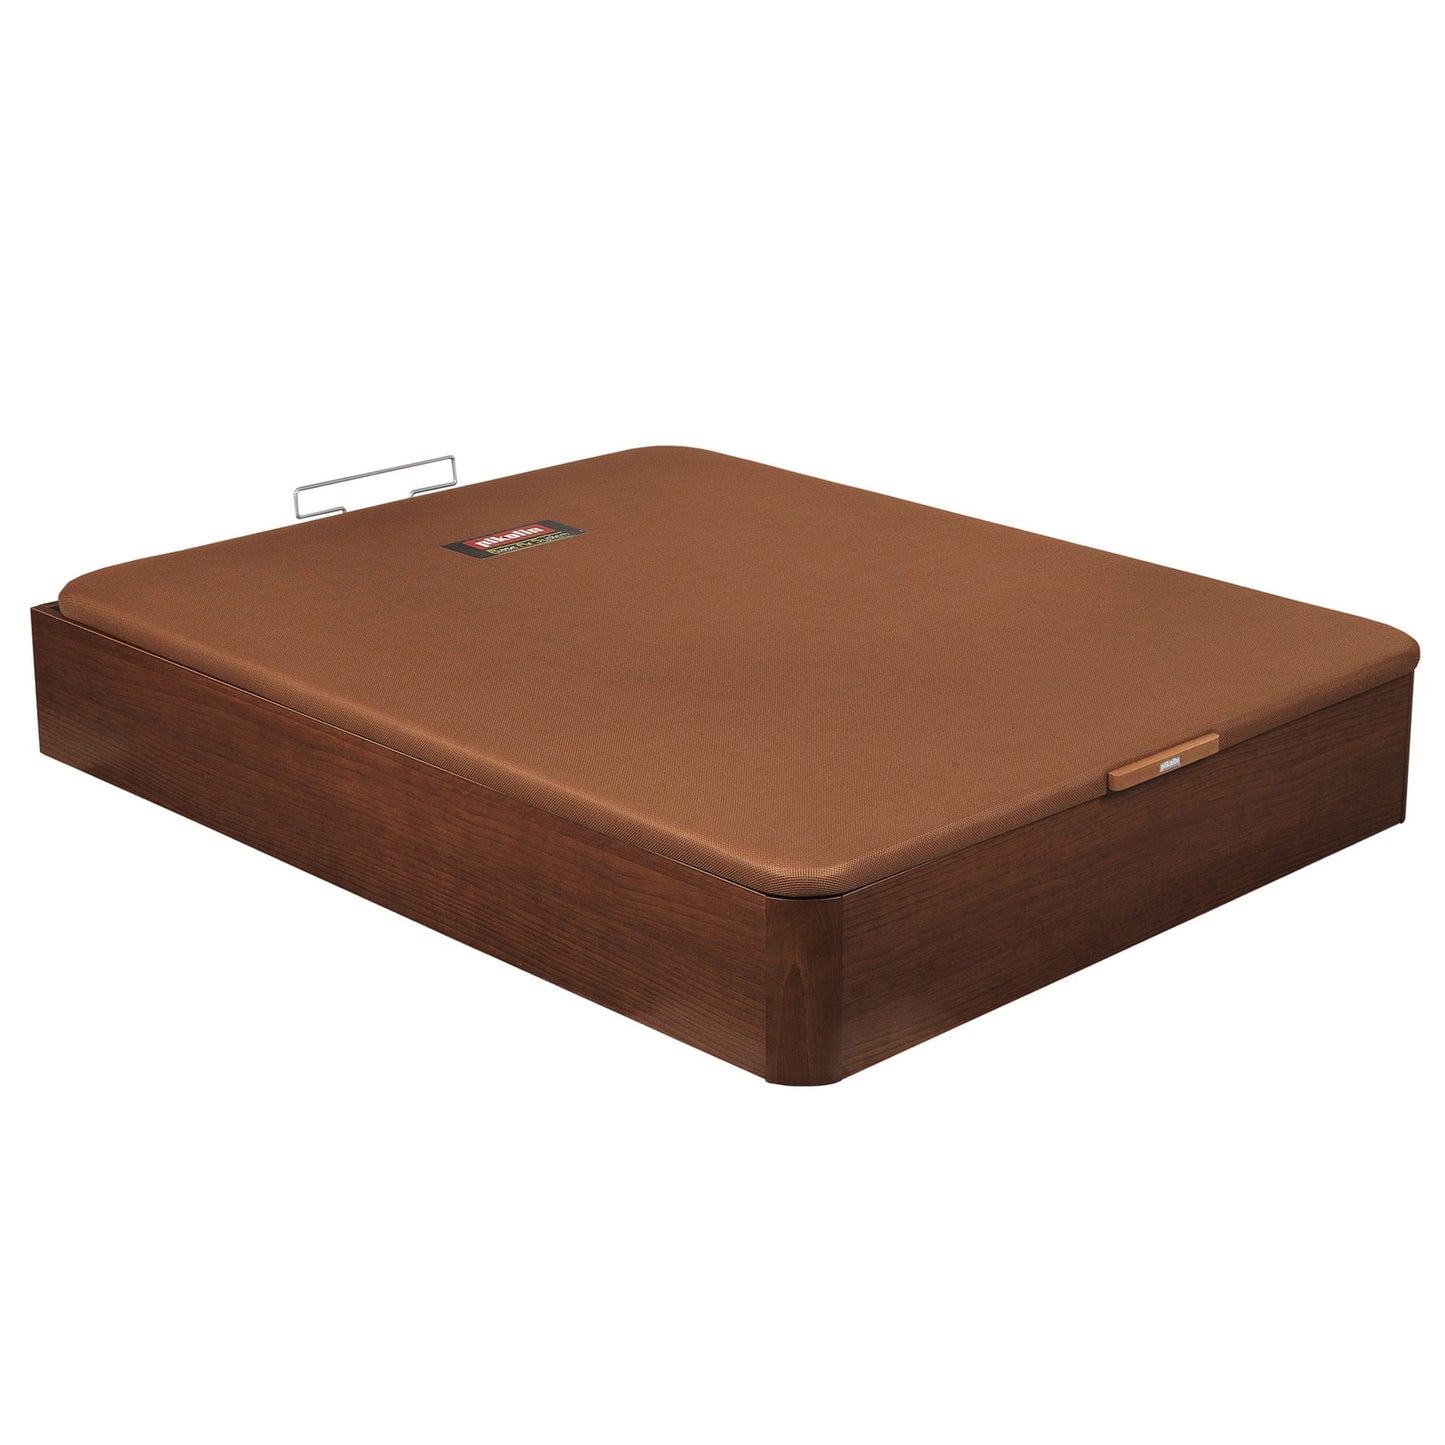 Canapé abatible de madera de color cerezo - NATURBOX CEREZO - 135x190